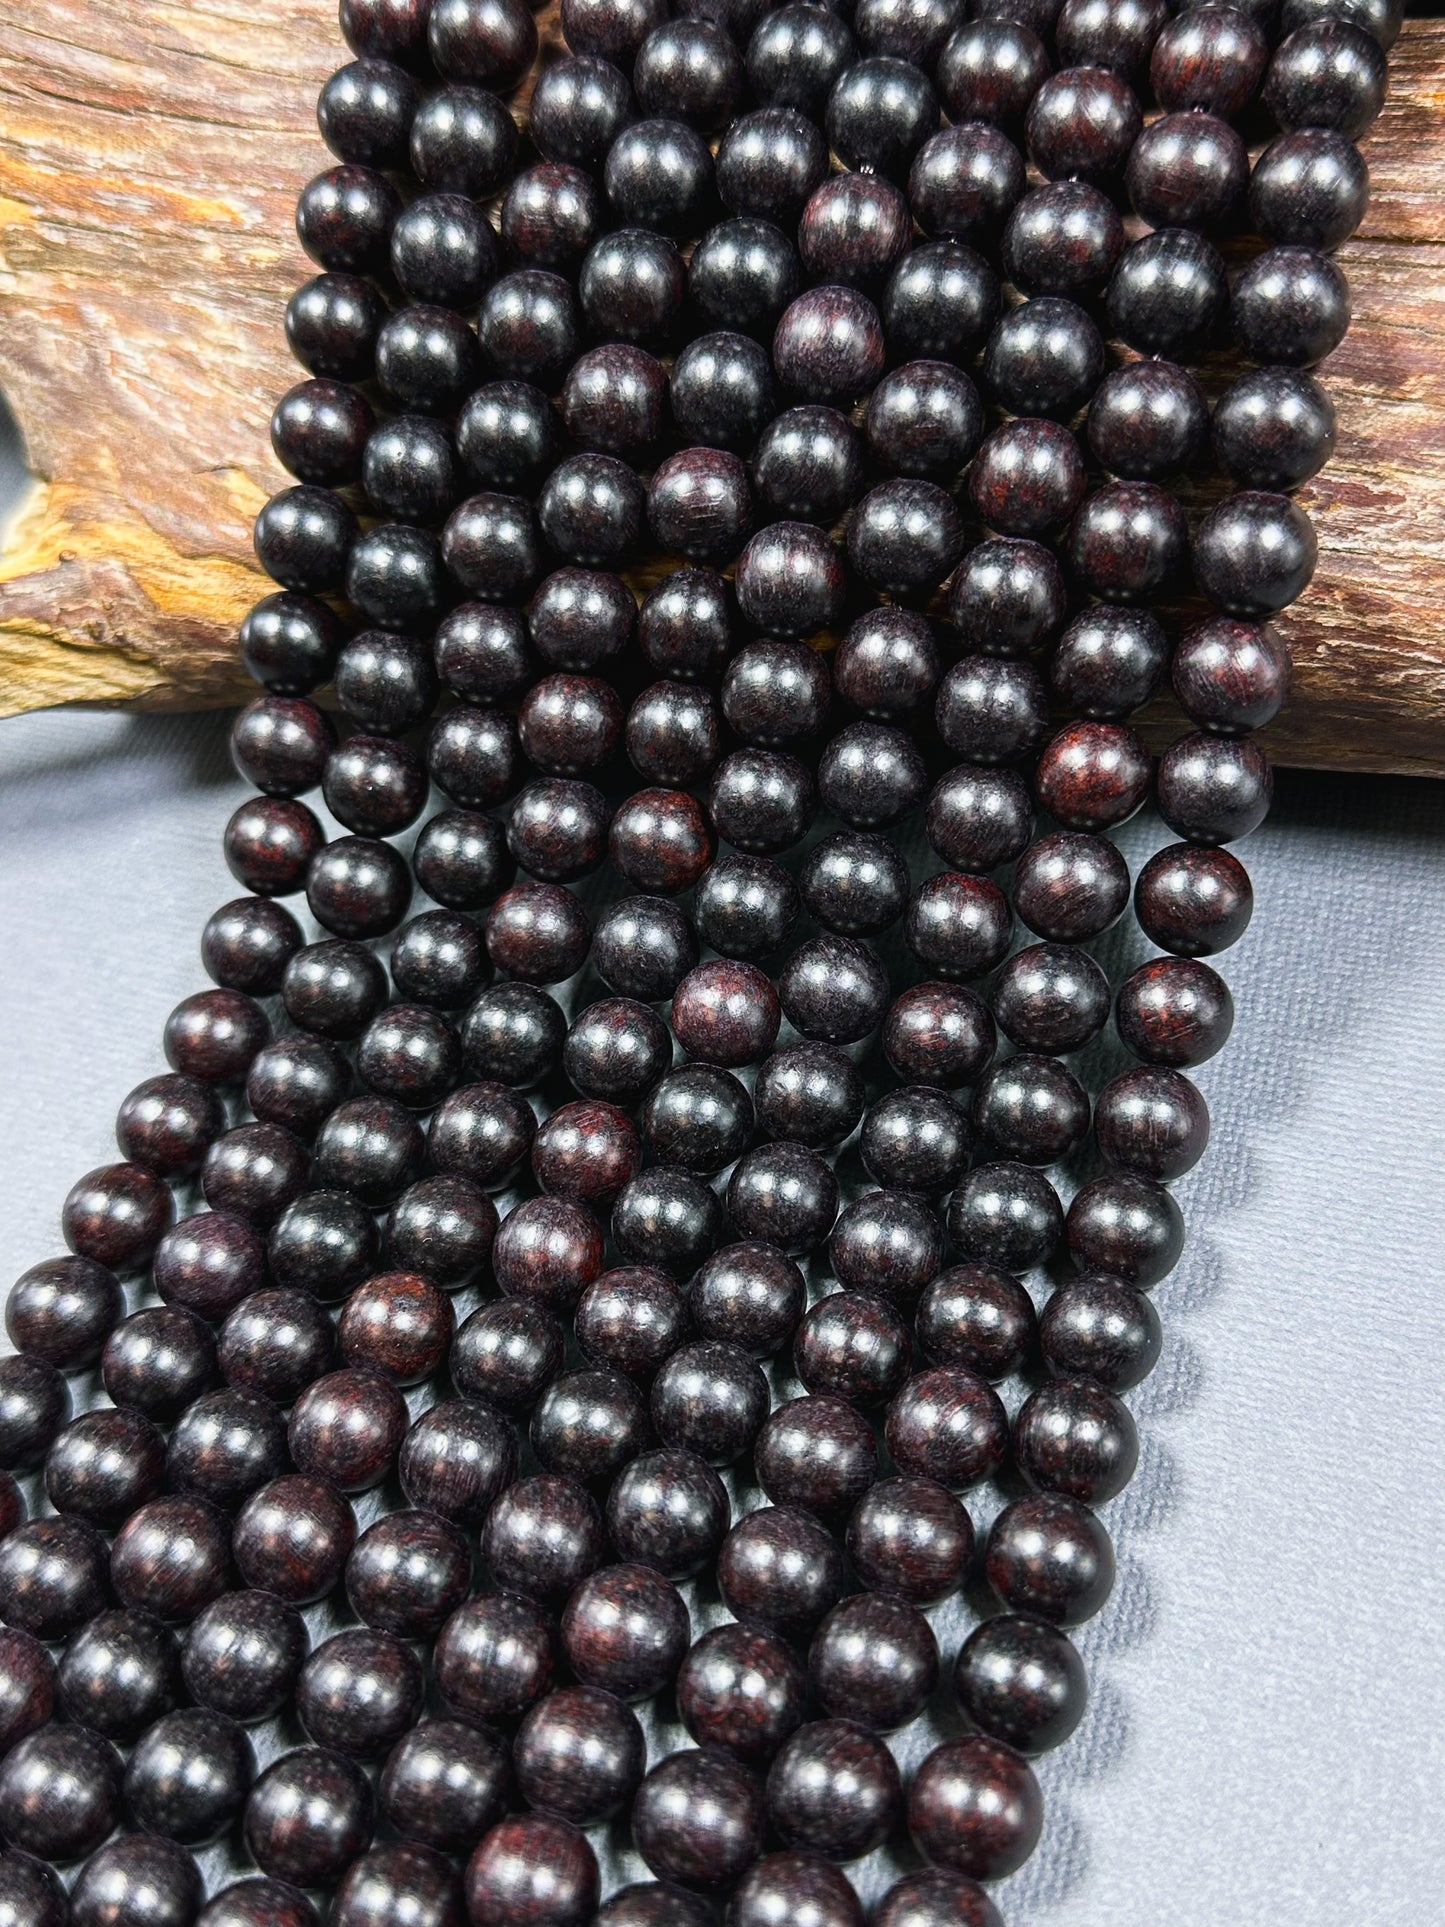 Natural Ebony Blackwood Beads 6mm 8mm 10mm Round Beads, Natural Black Aromatic Wood Meditation Prayer Mala Beads Full Strand 15.5"